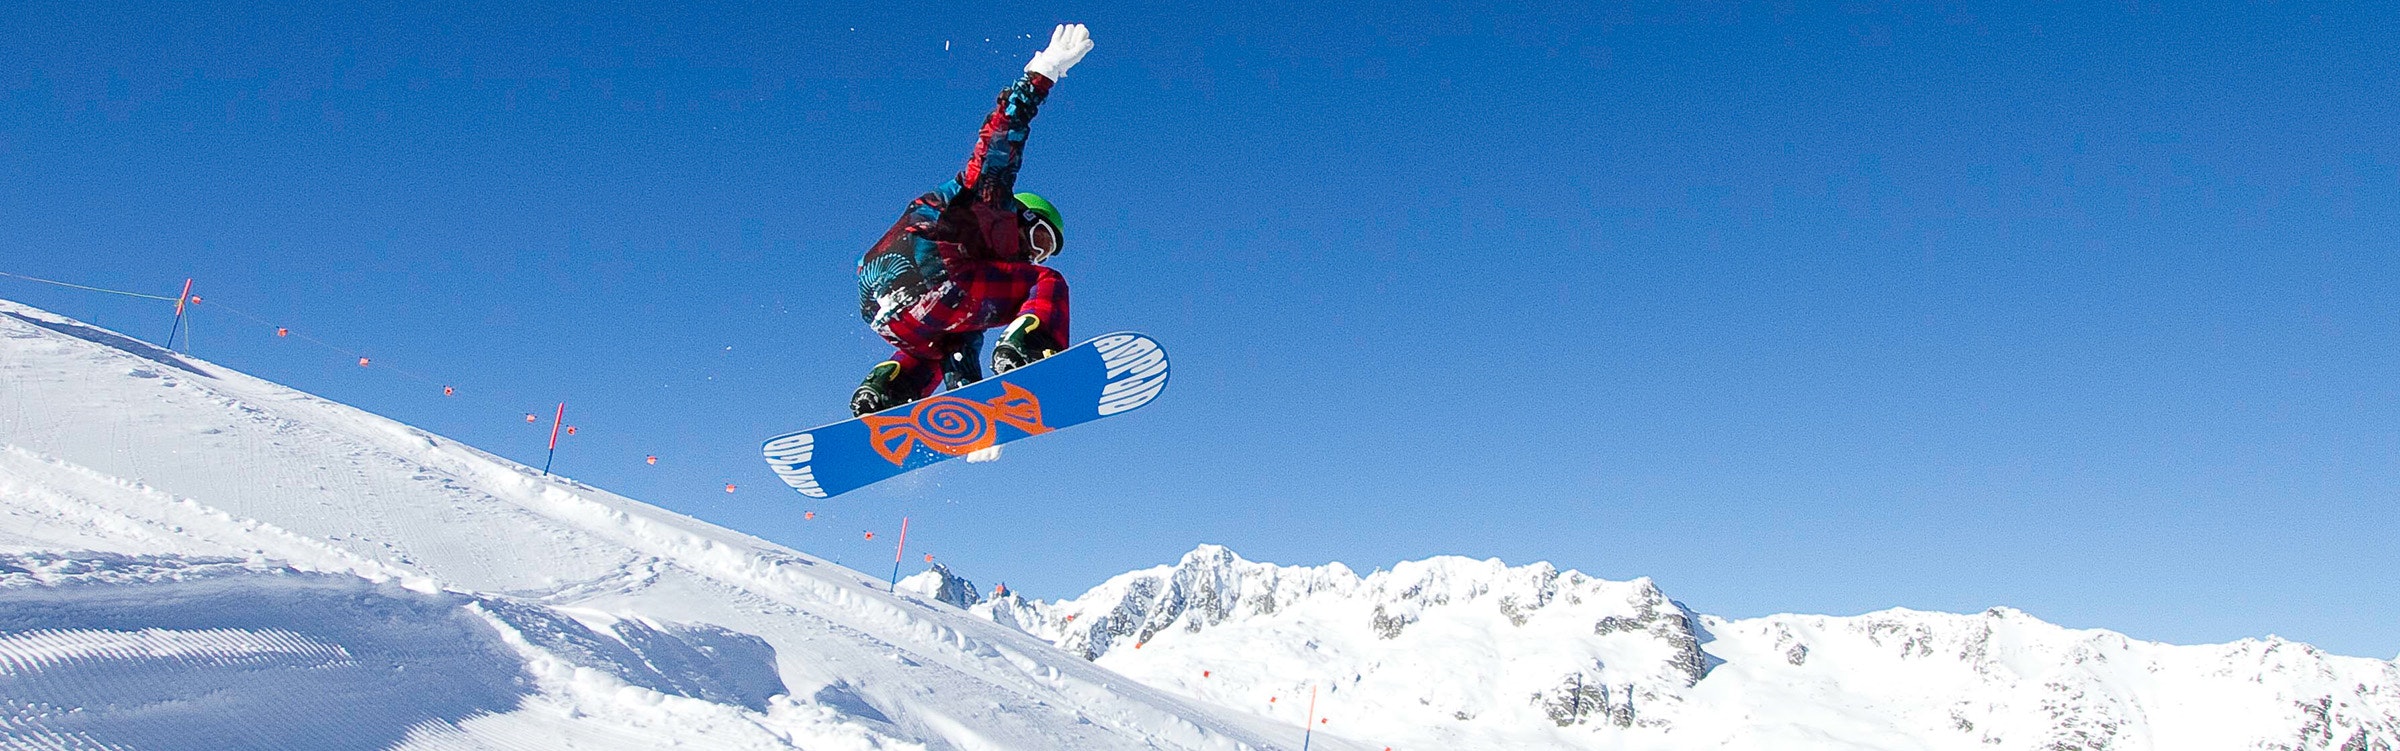 Skilager, Klassenlager, Wintersport, TeamFoto: BASPO / Ulrich Känzig